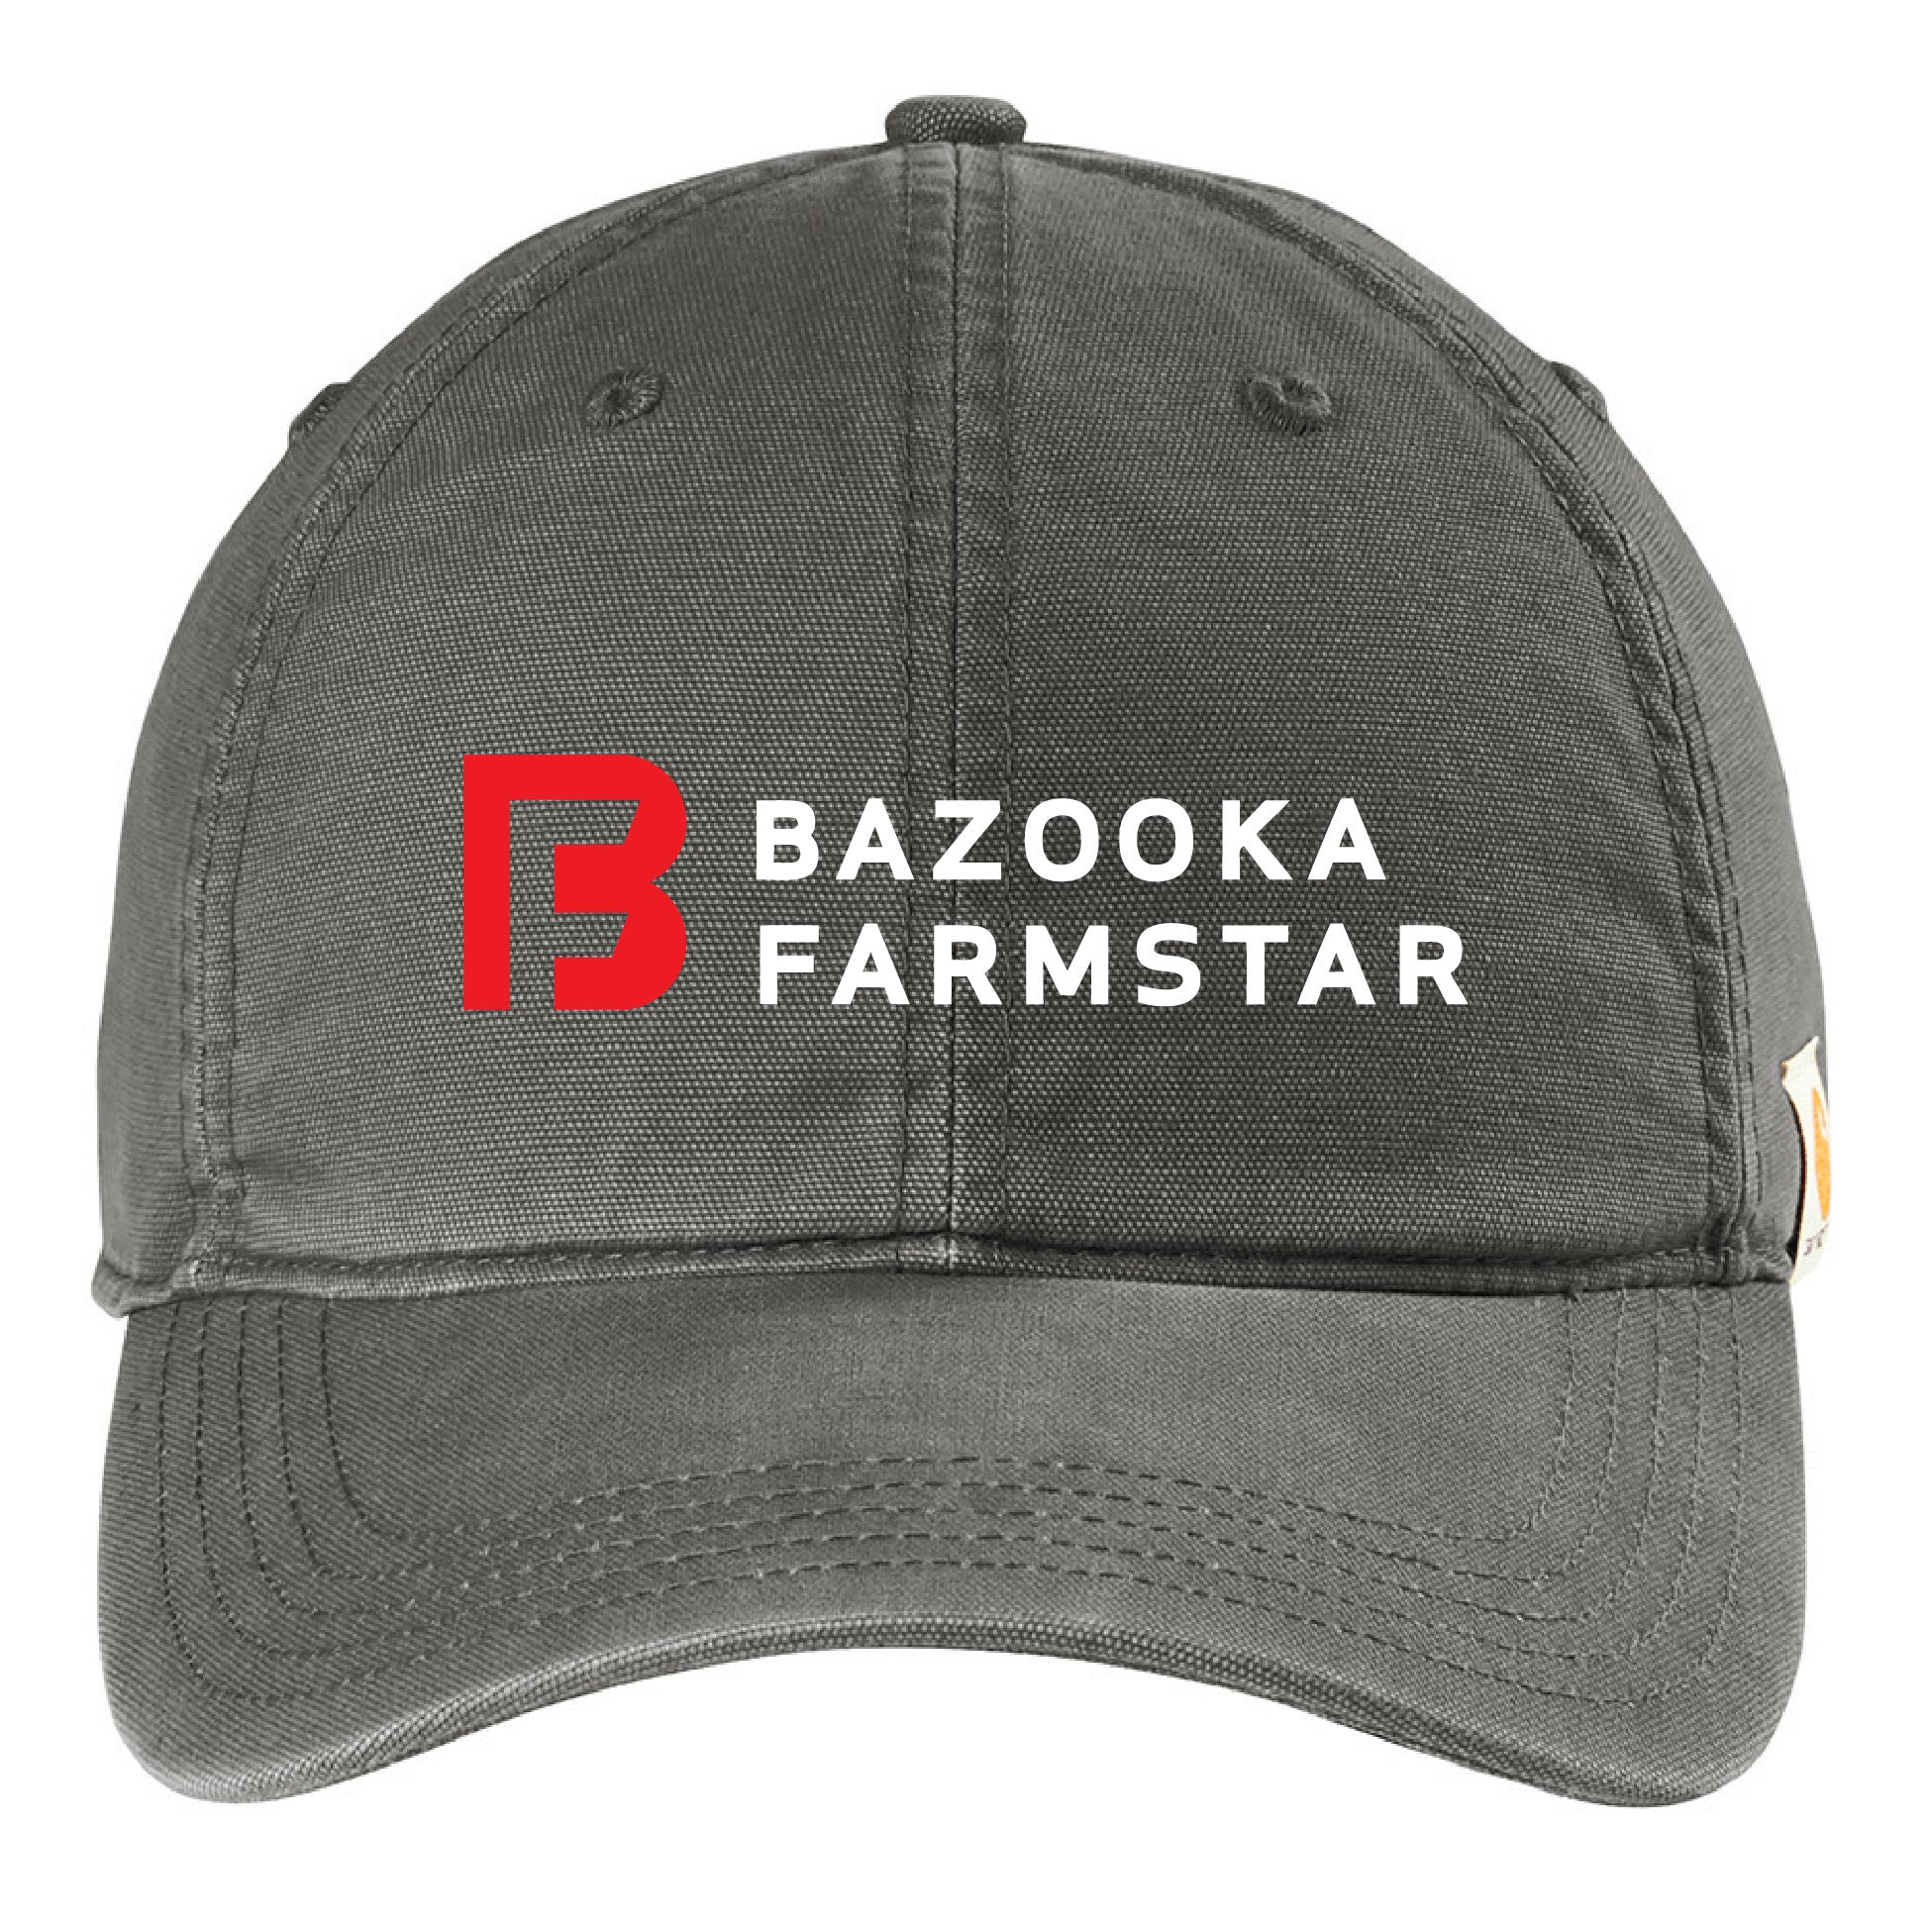 Bazooka Farmstar Carhartt Cotton Canvas Cap